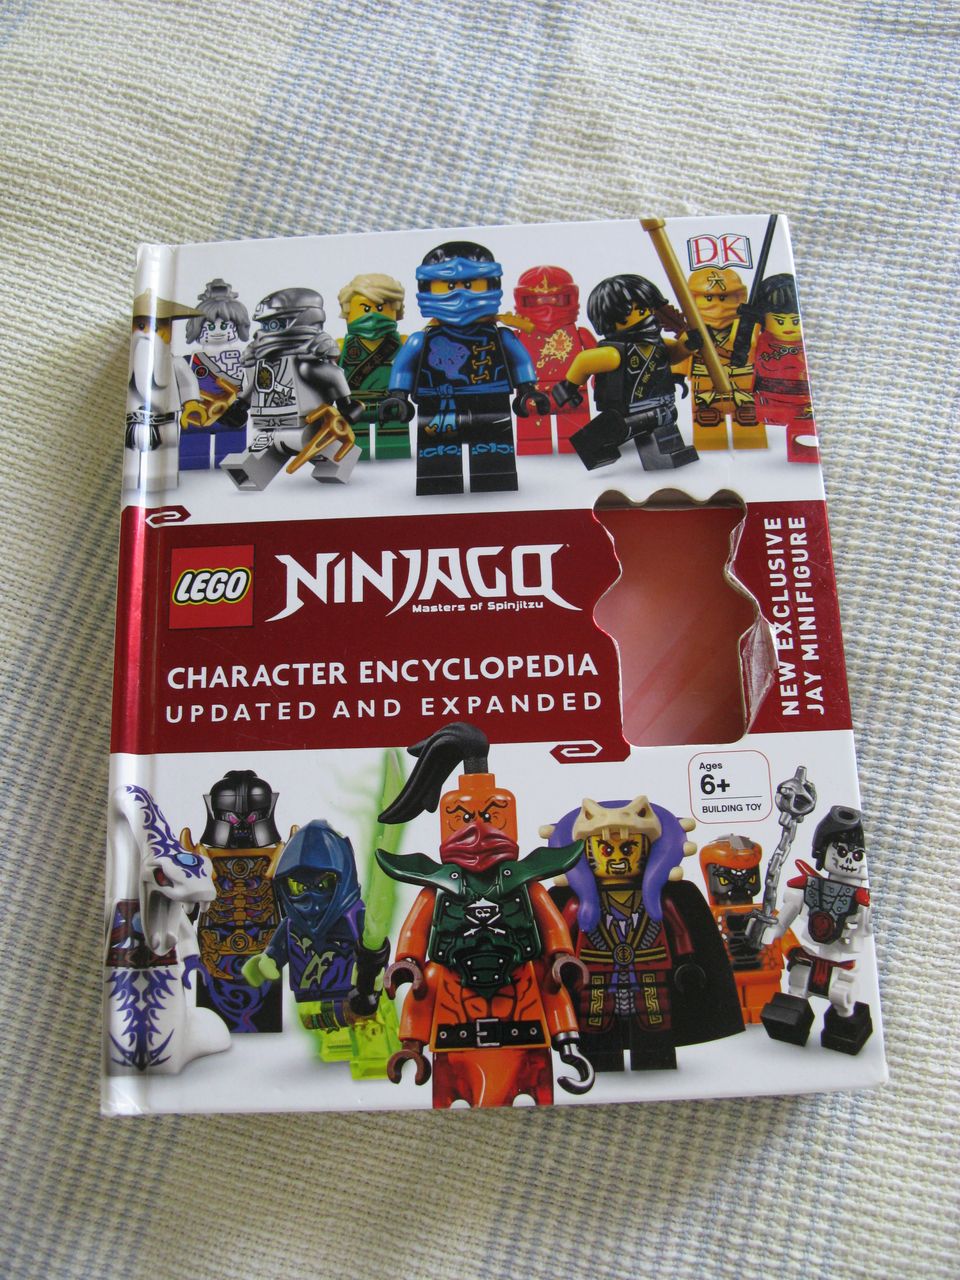 Ninjago character encyclopedia